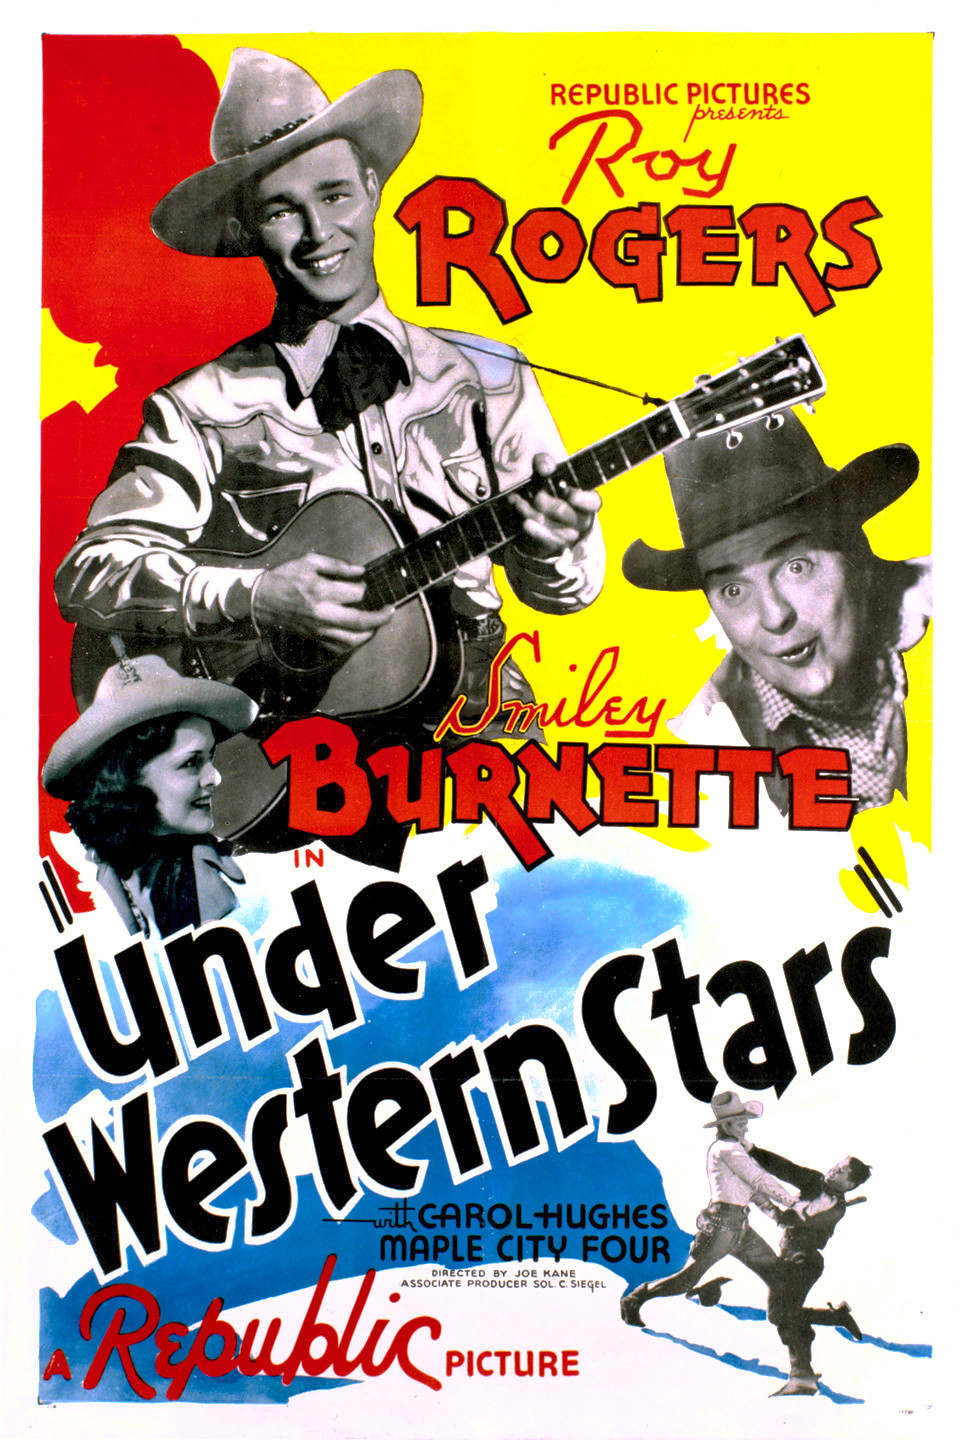 Roy Rogers In A Cowboy Hat Poster | tk.gov.ba